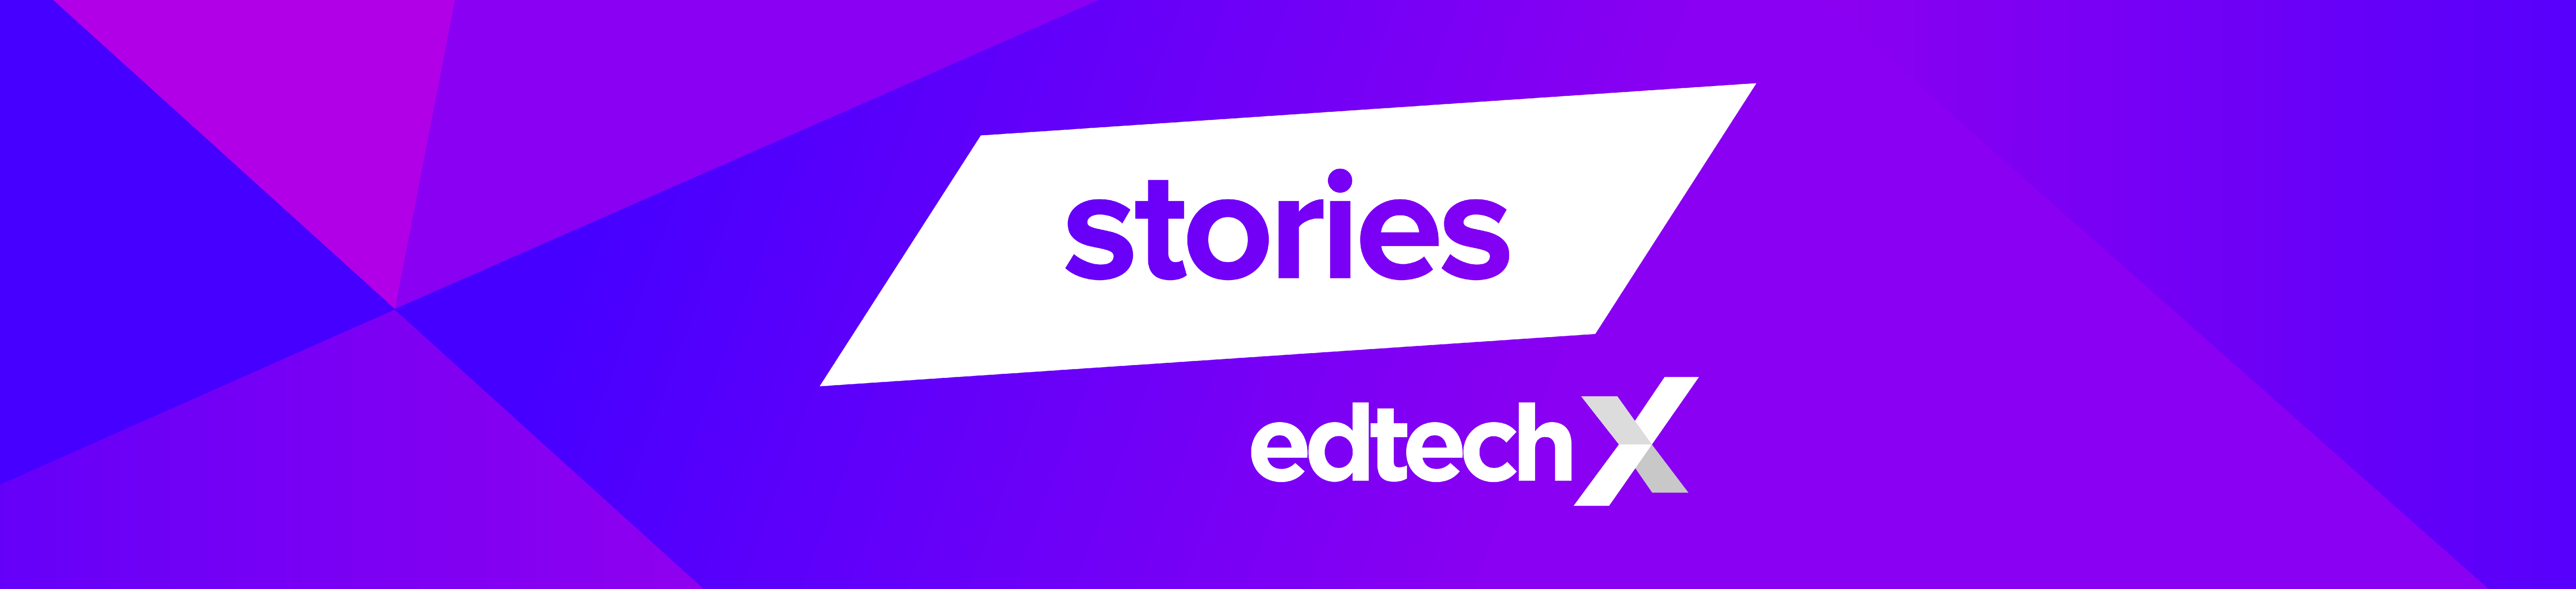 EdTechX Stories